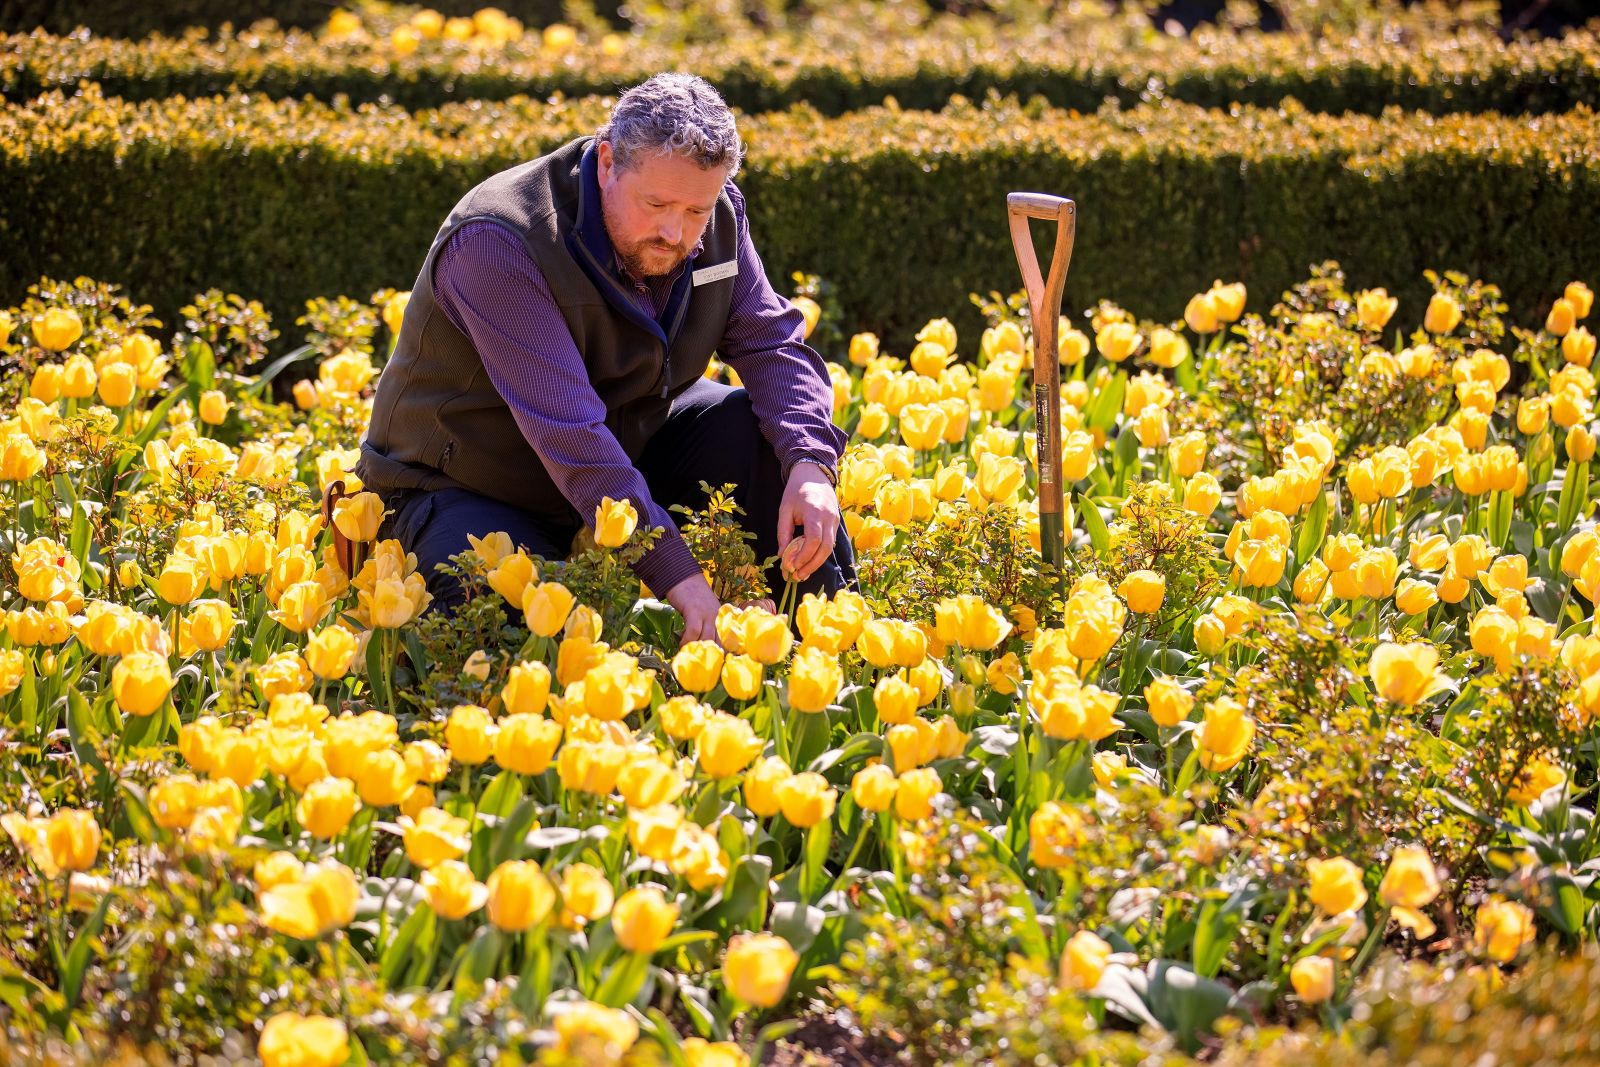 © Ollie Dixon, a shot of Head Gardener Tony Wiseman tending to the Tulips